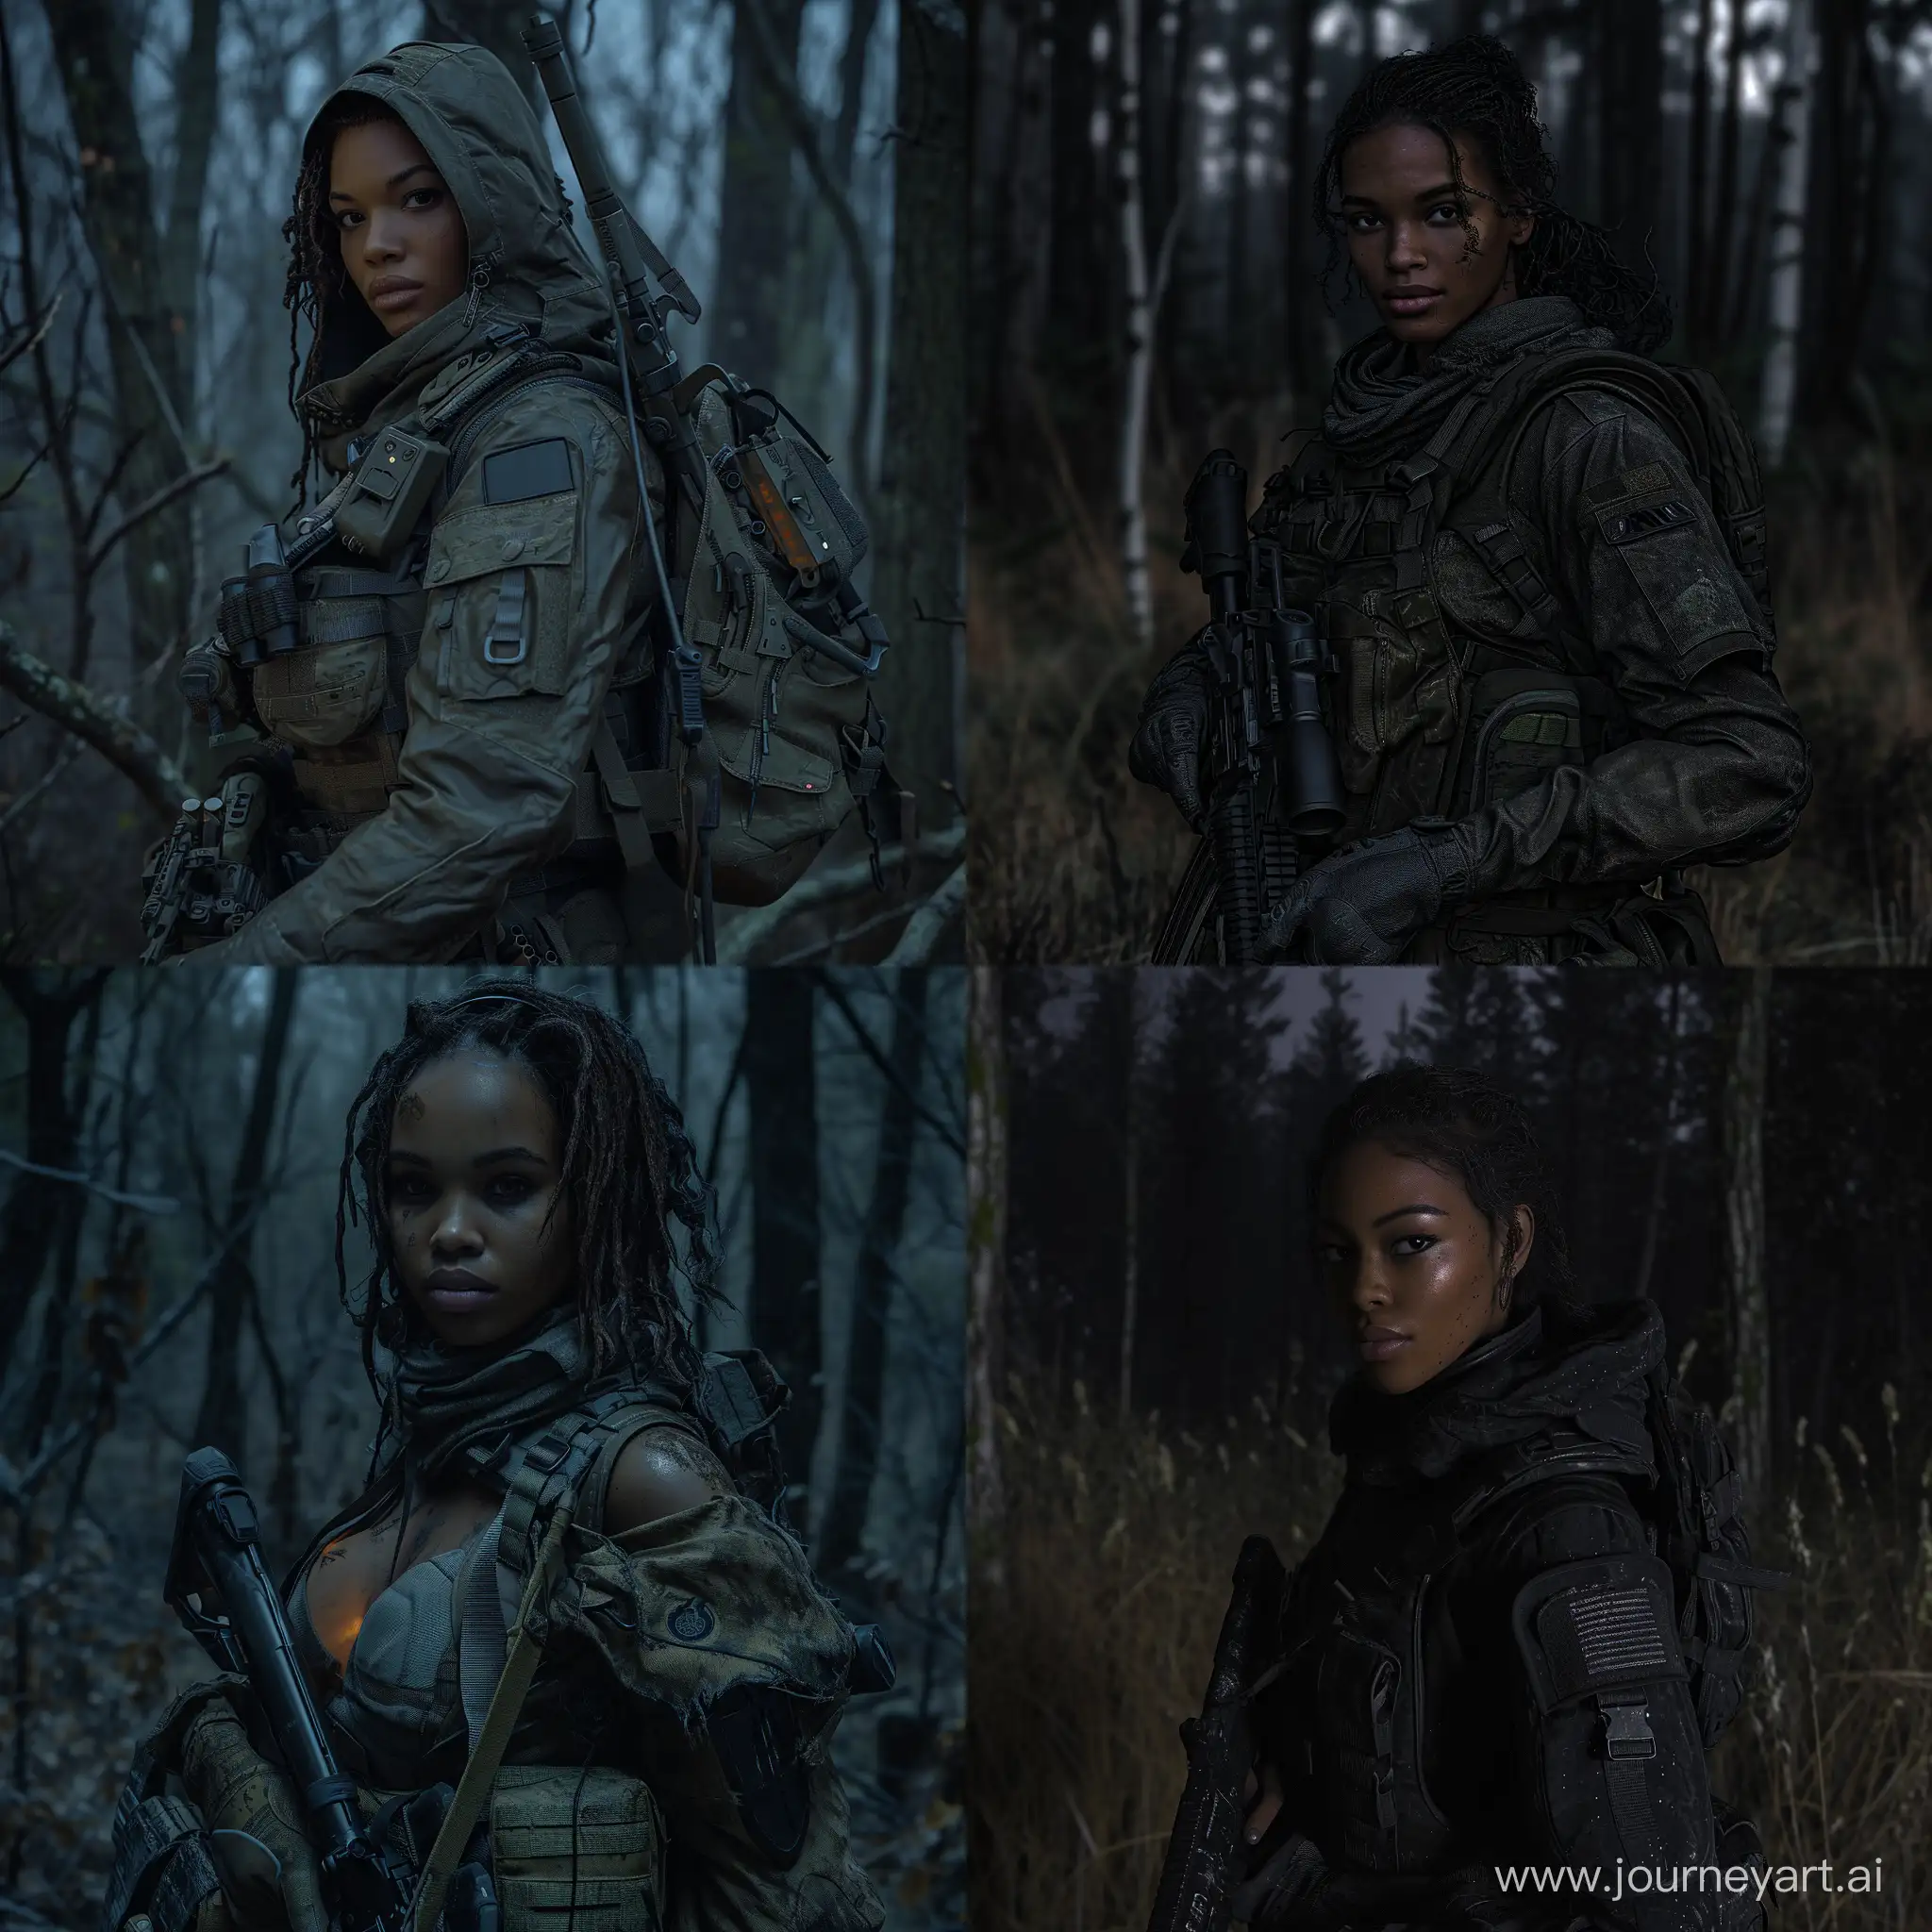 Striking-Mulatto-Mercenary-Sheva-Alomar-in-Dark-Tactical-Gear-amid-a-Desolate-STALKER-Forest